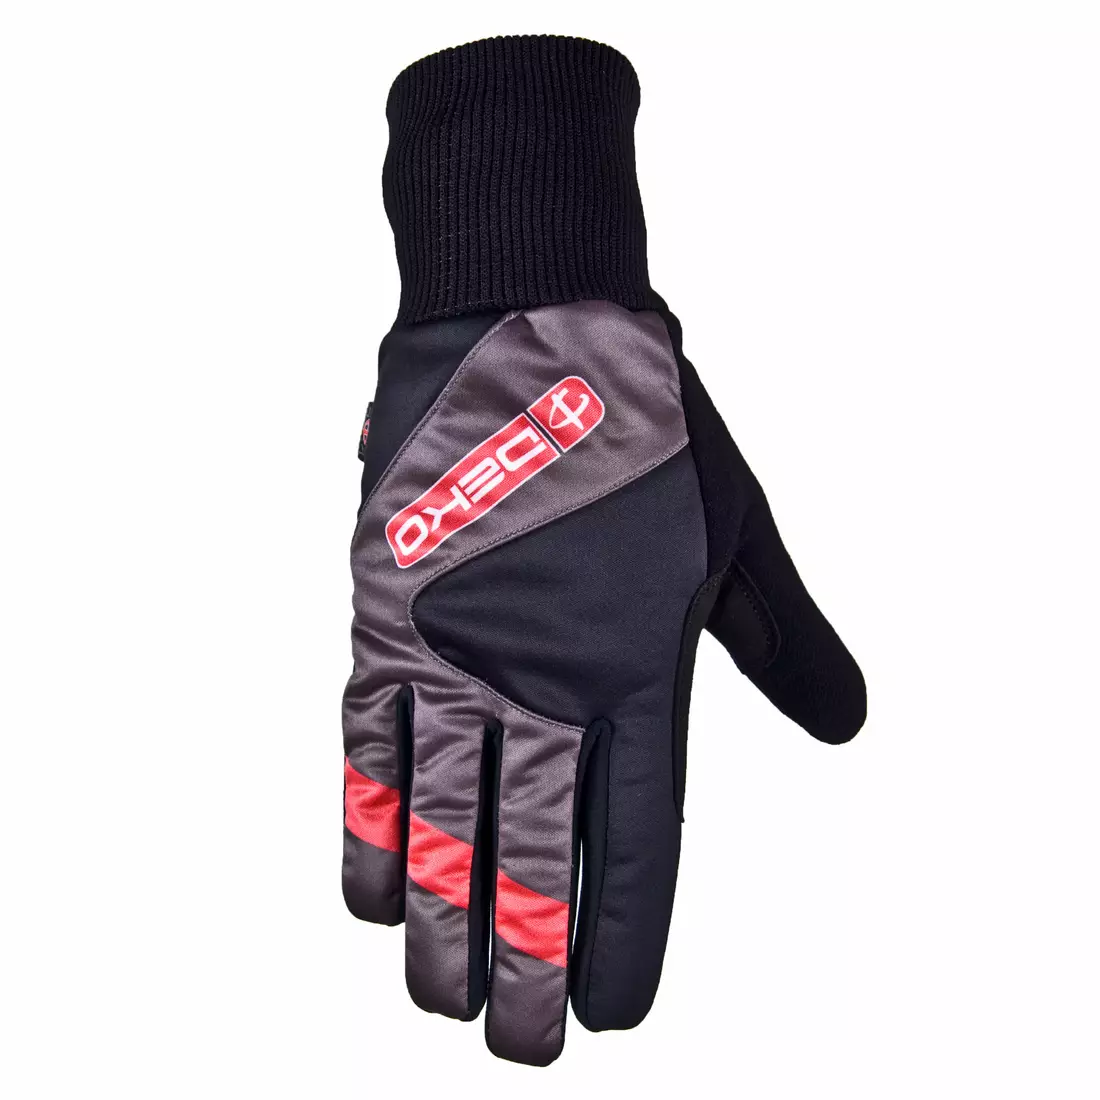 DEKO RAST winter cycling gloves black and red DKW-910